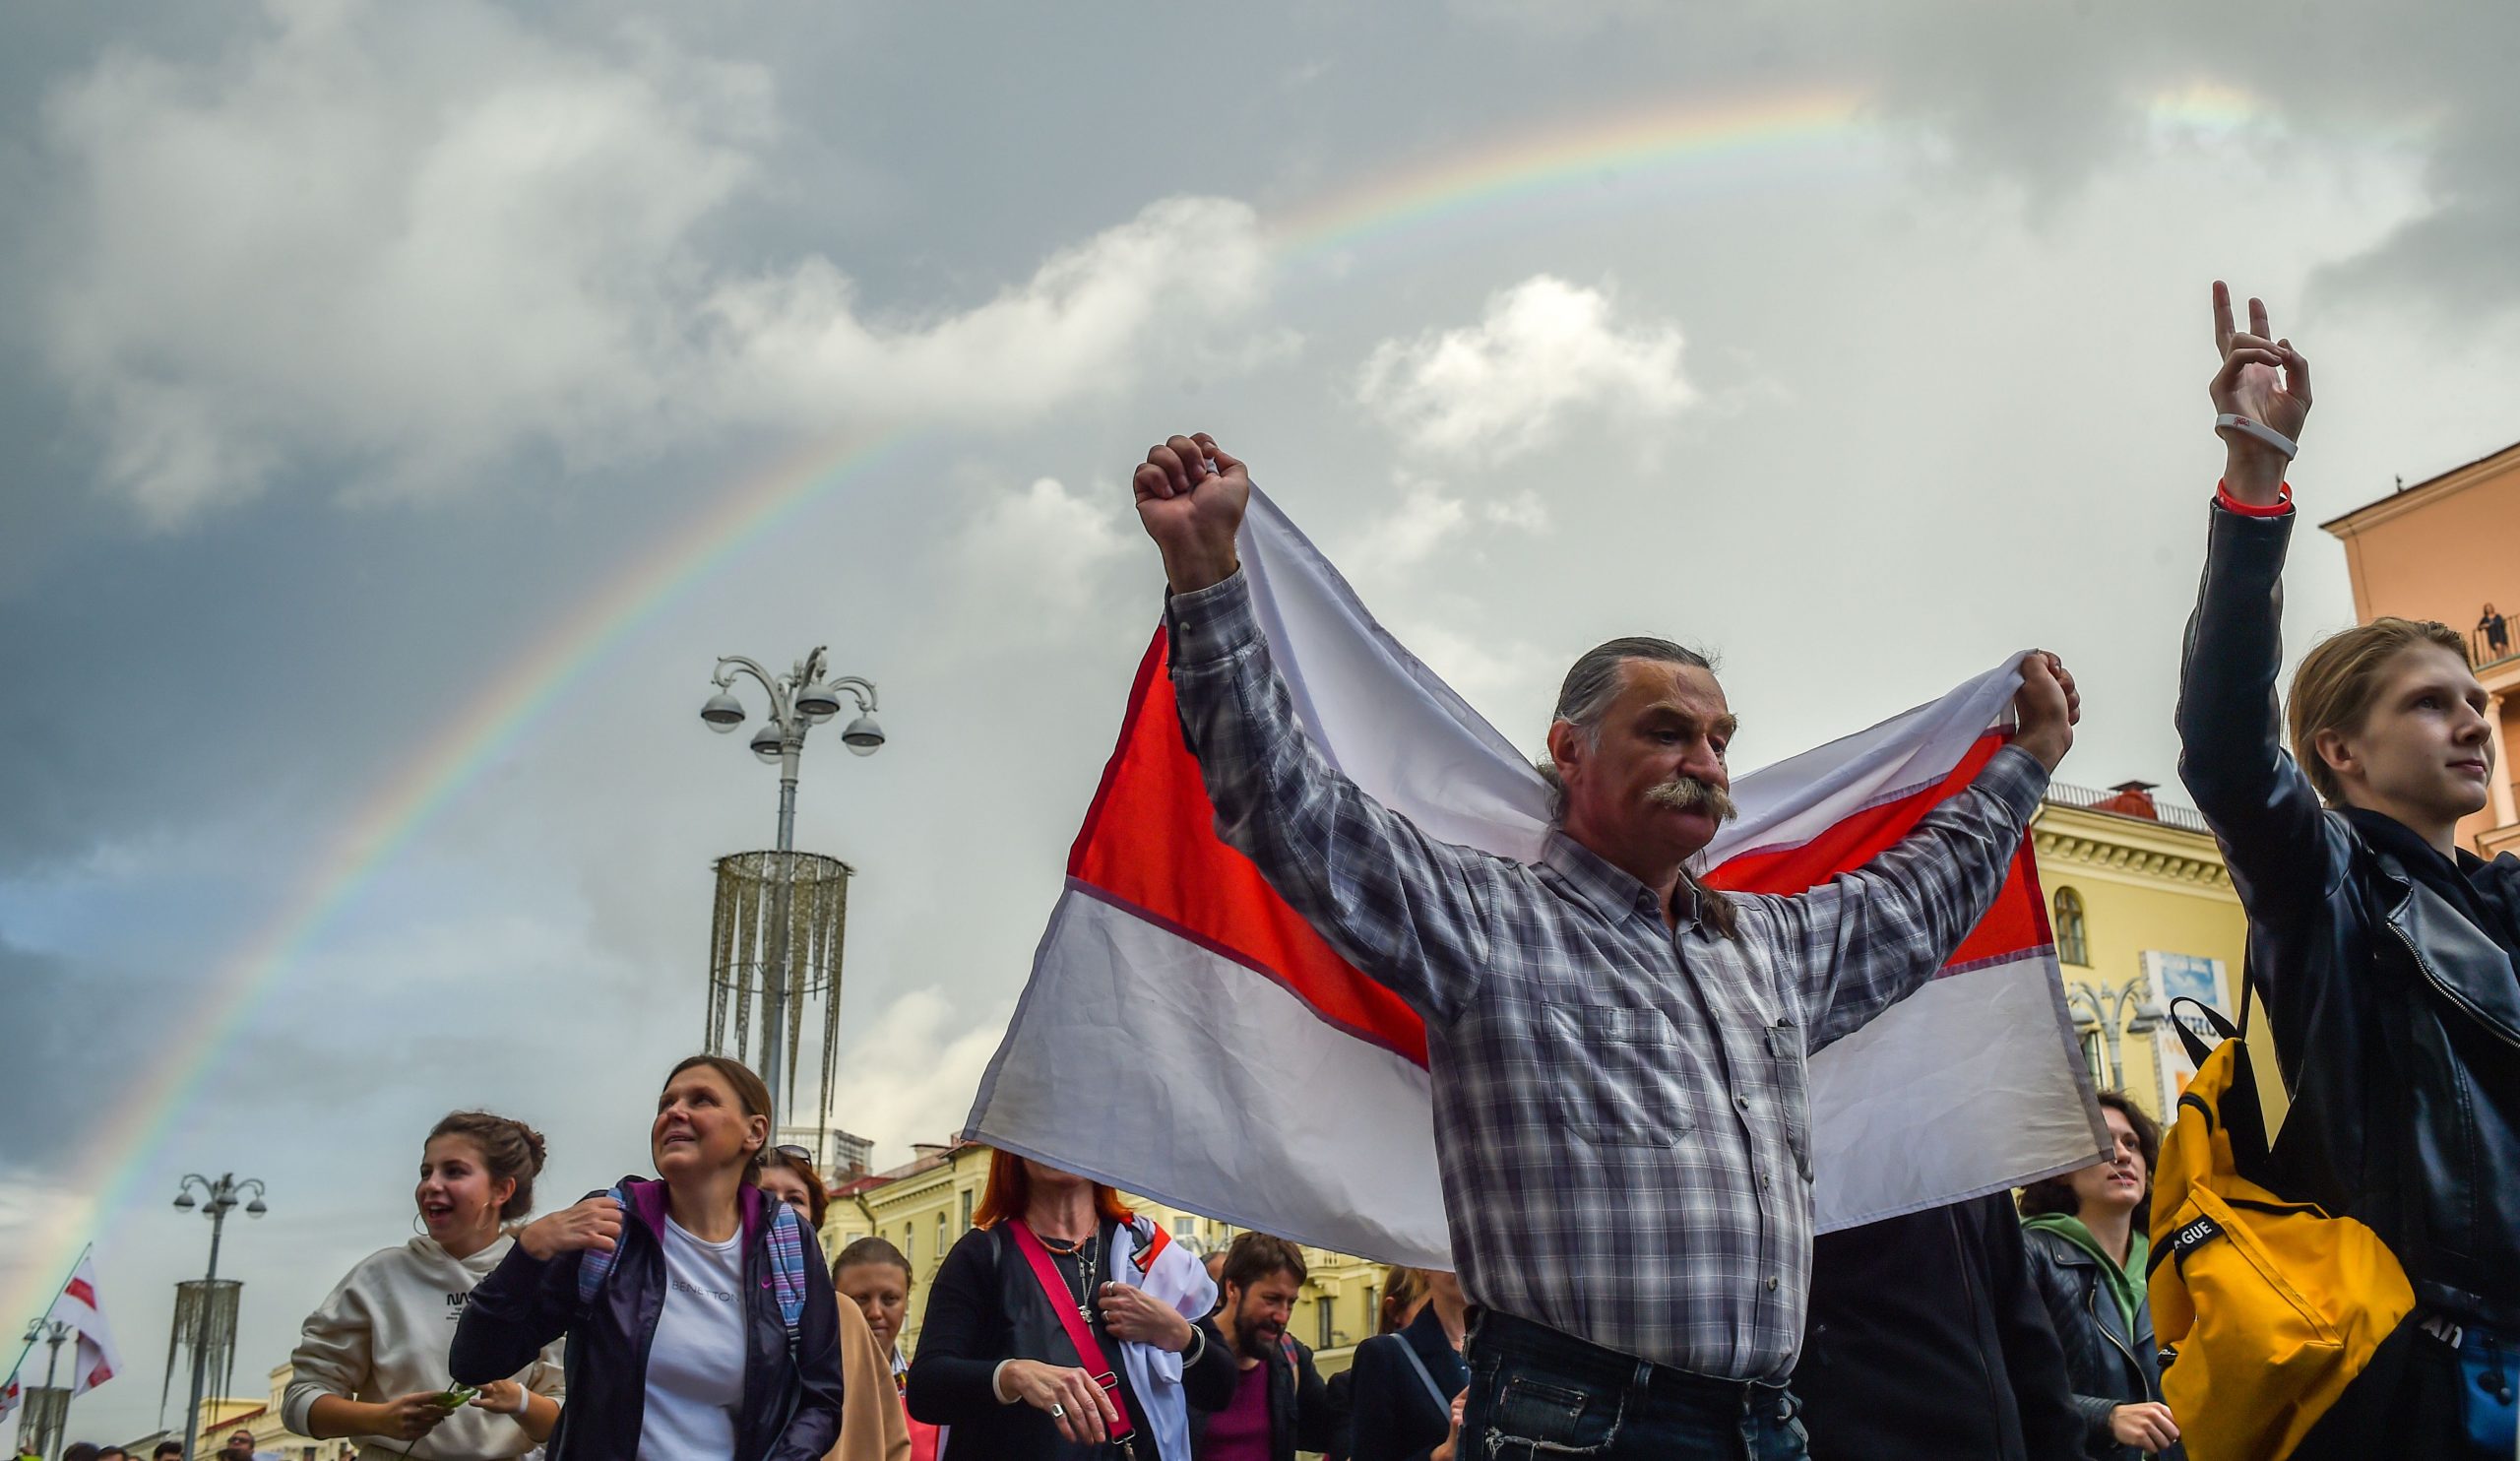 Над протестующими в четверг появилась радуга. Фото Sergei GAPON / AFP/Scanpix/Leta